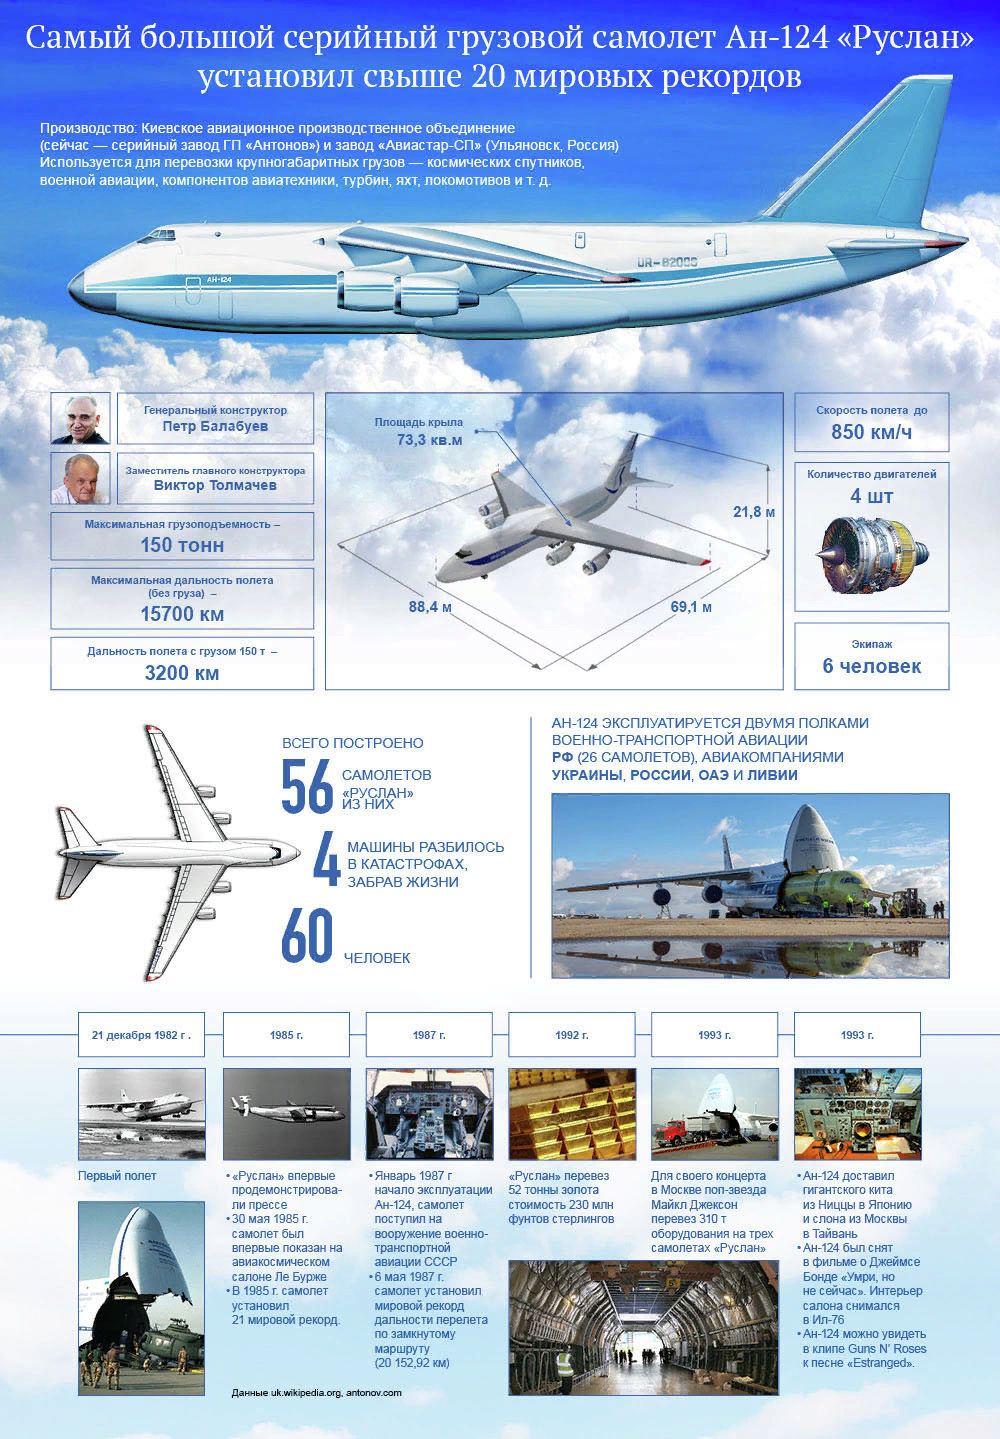 Антонов ан-124. фото и видео, история, характеристики самолета